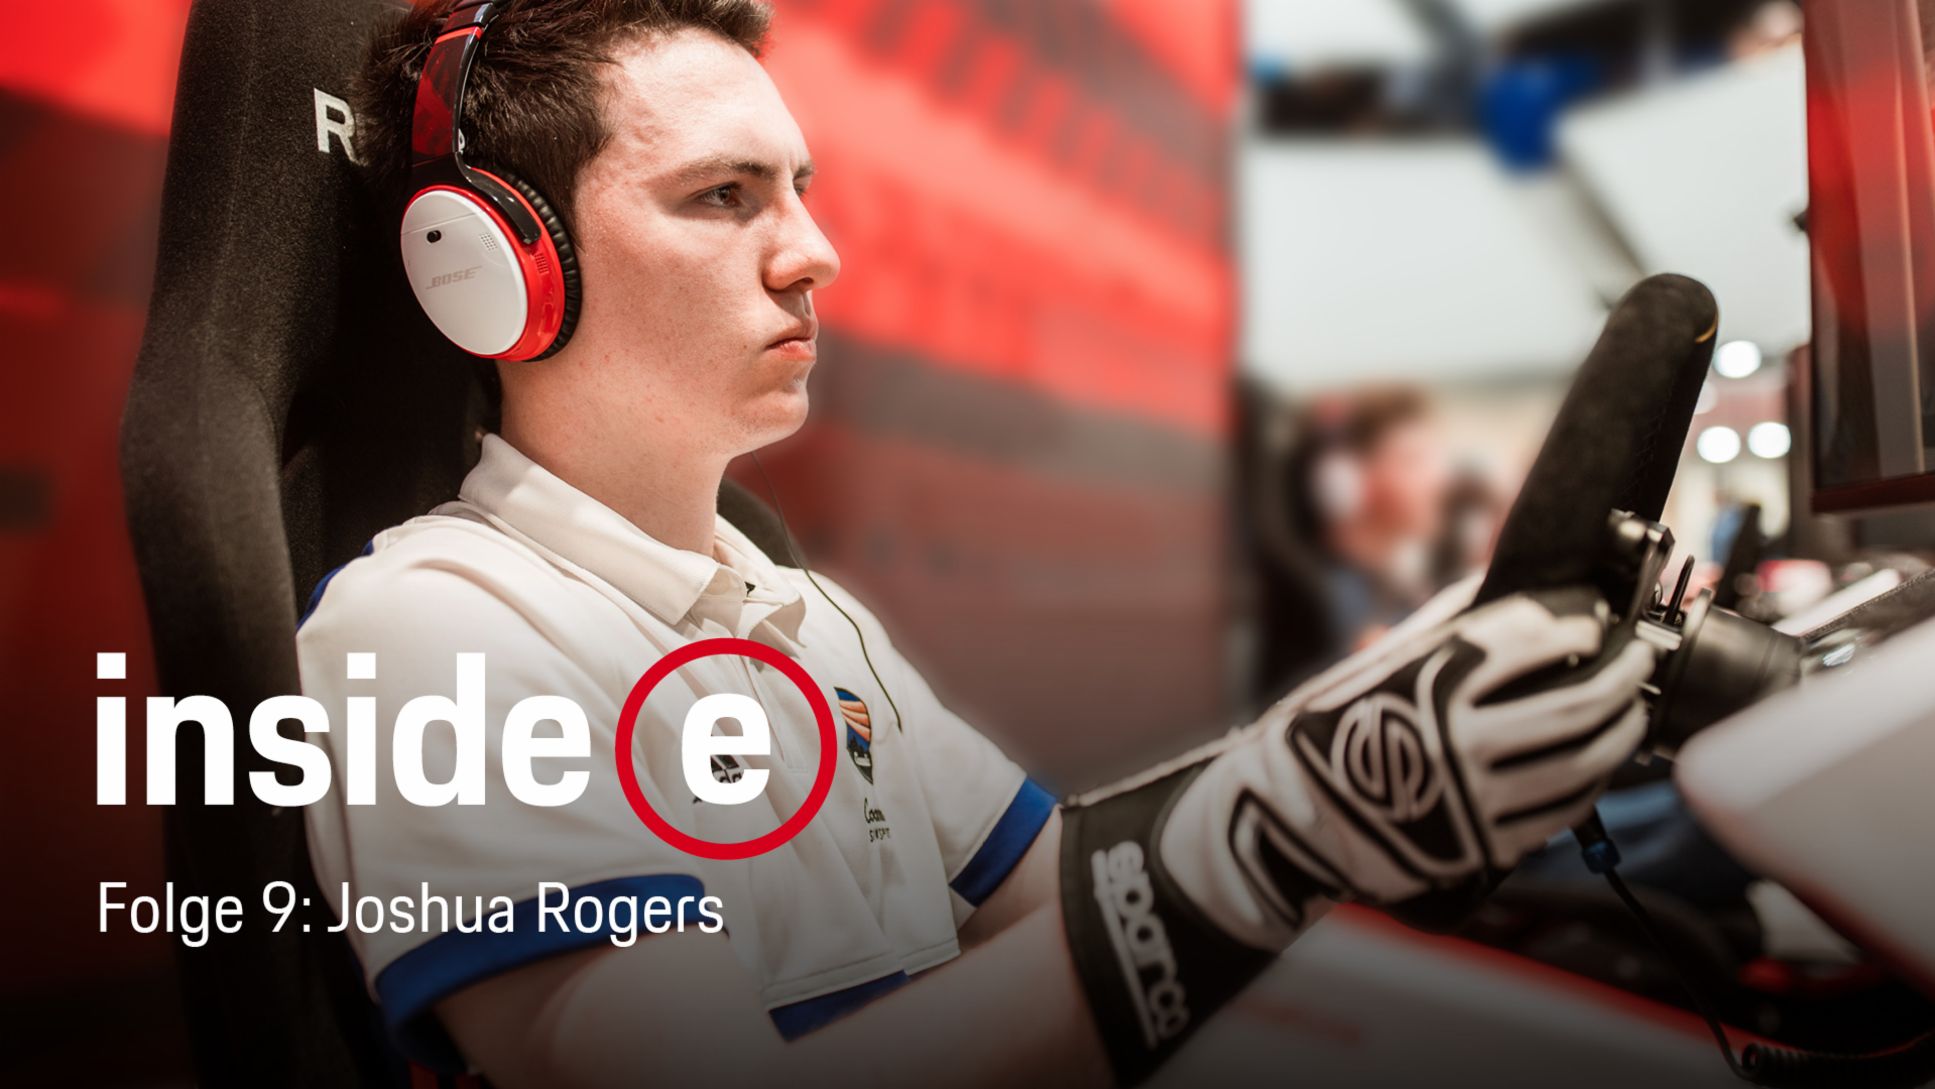 „Inside E“ Podcast, Folge 9 mit Joshua Rogers, 2020, Porsche AG